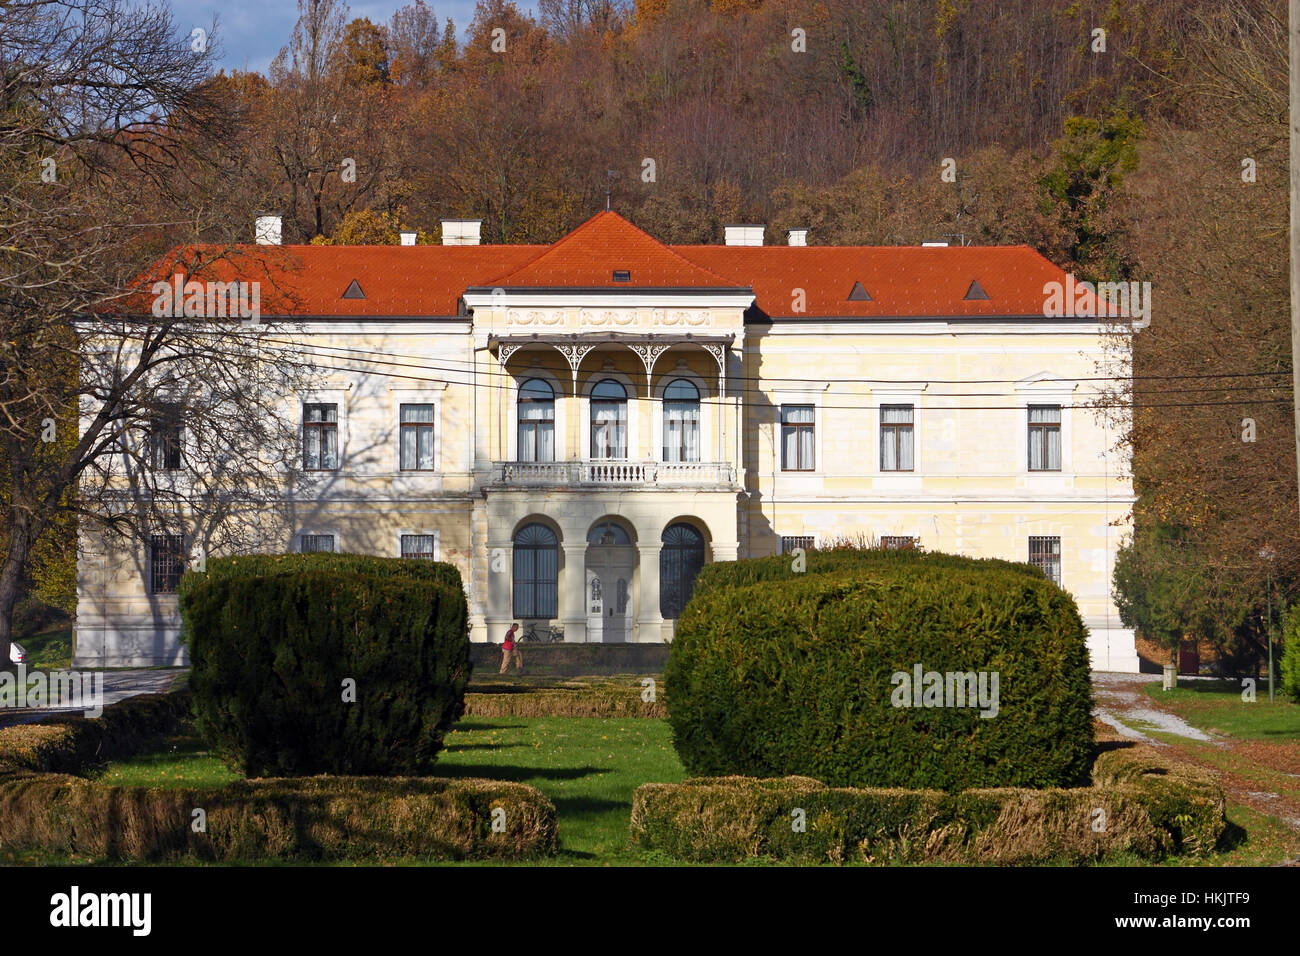 CROATIA ZAPRESIC, 9 NOVEMBER 2015: Castle Laduc, located near Zapresic, Croatia Stock Photo